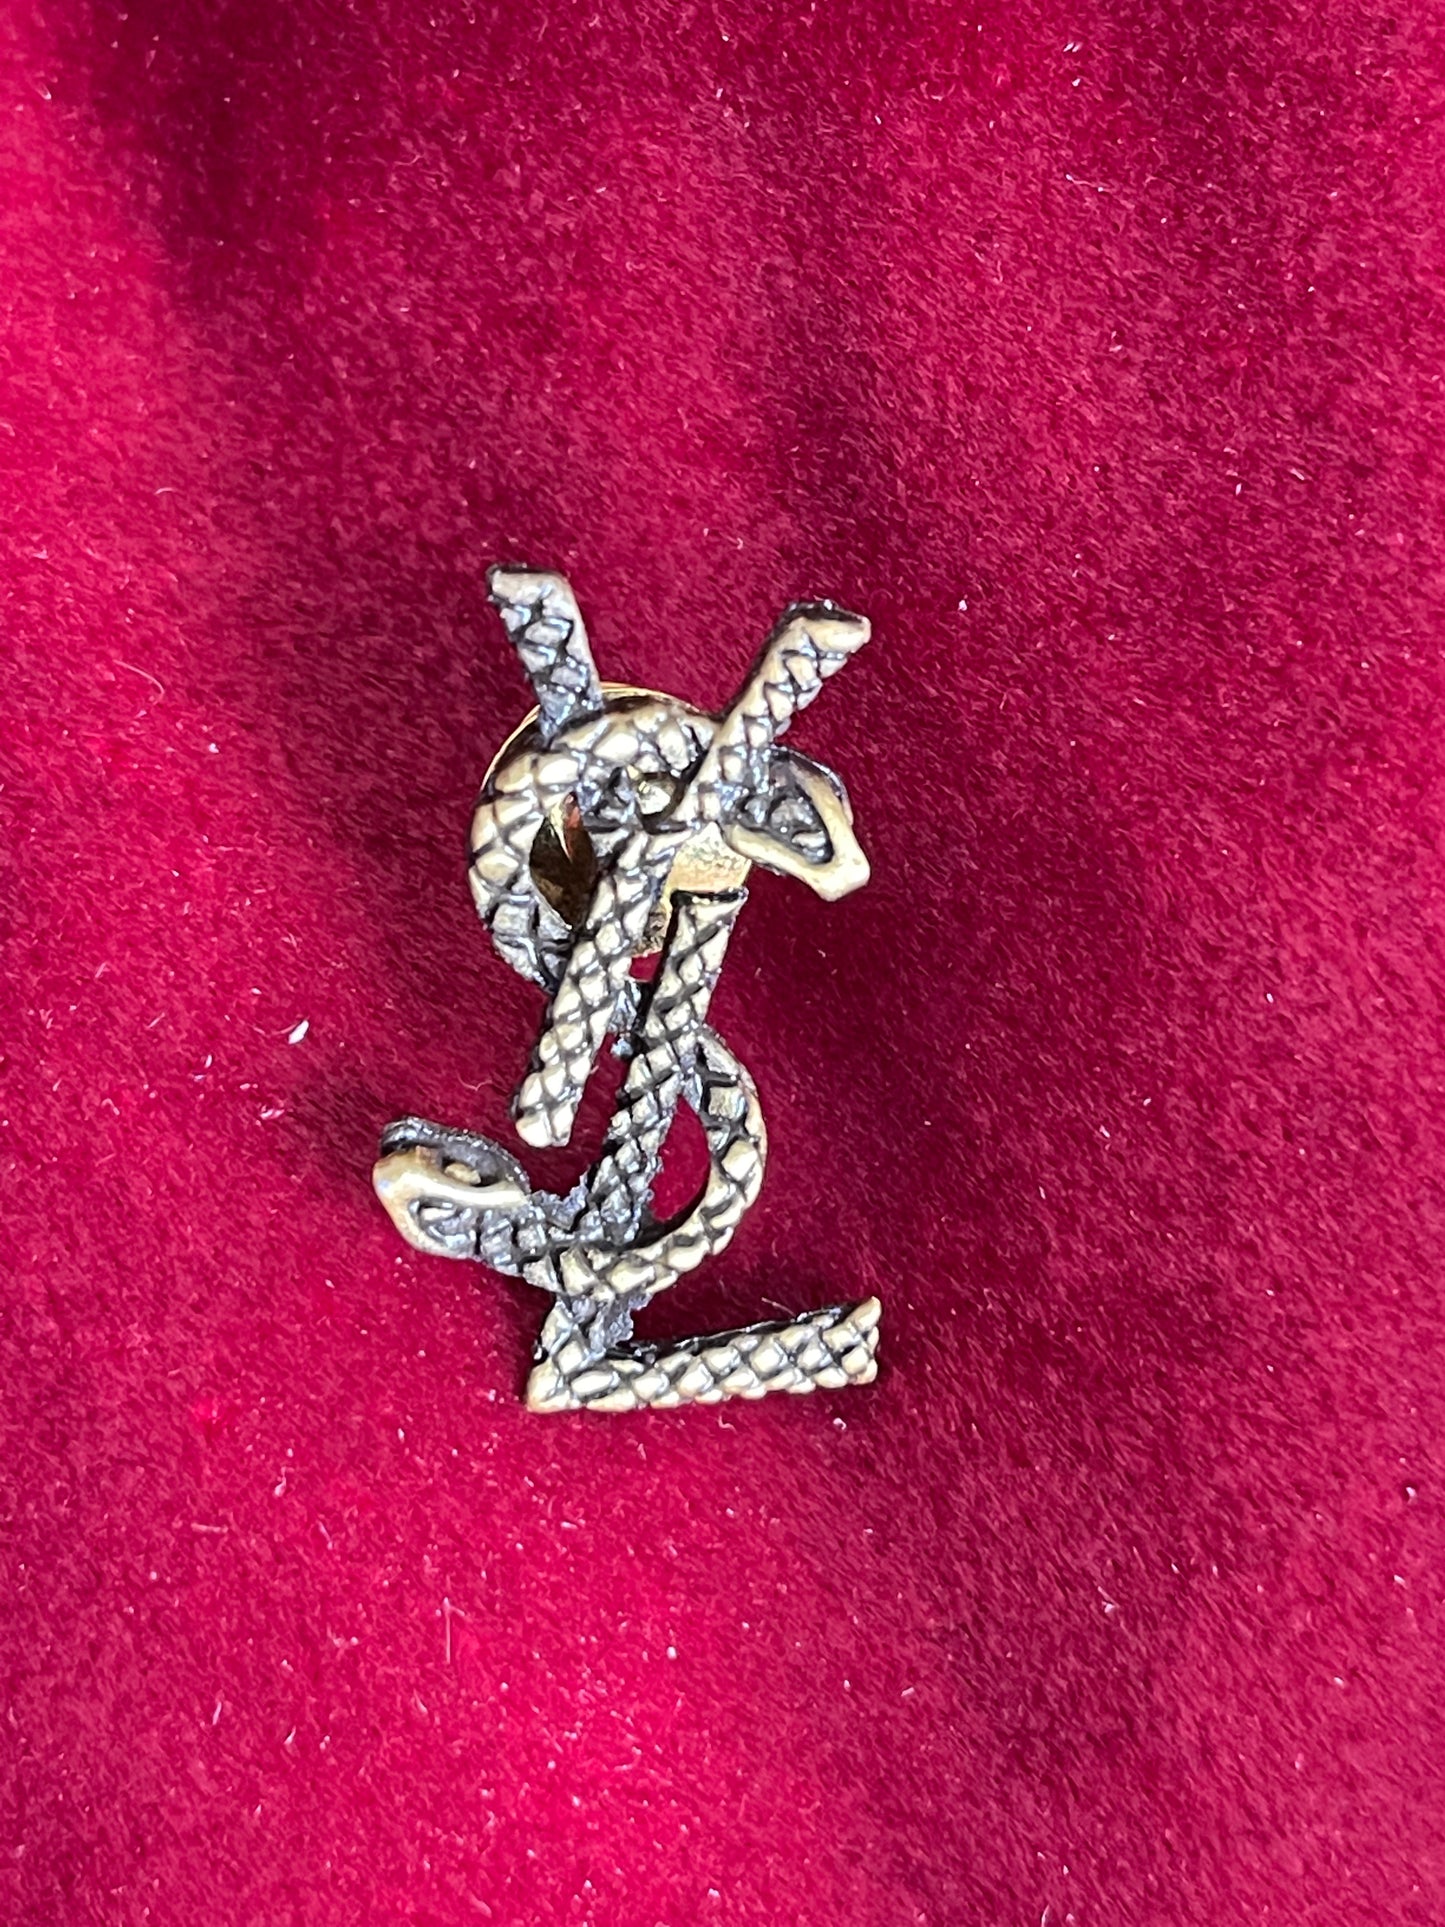 Yves Saint Laurent Copper Serpent Pin